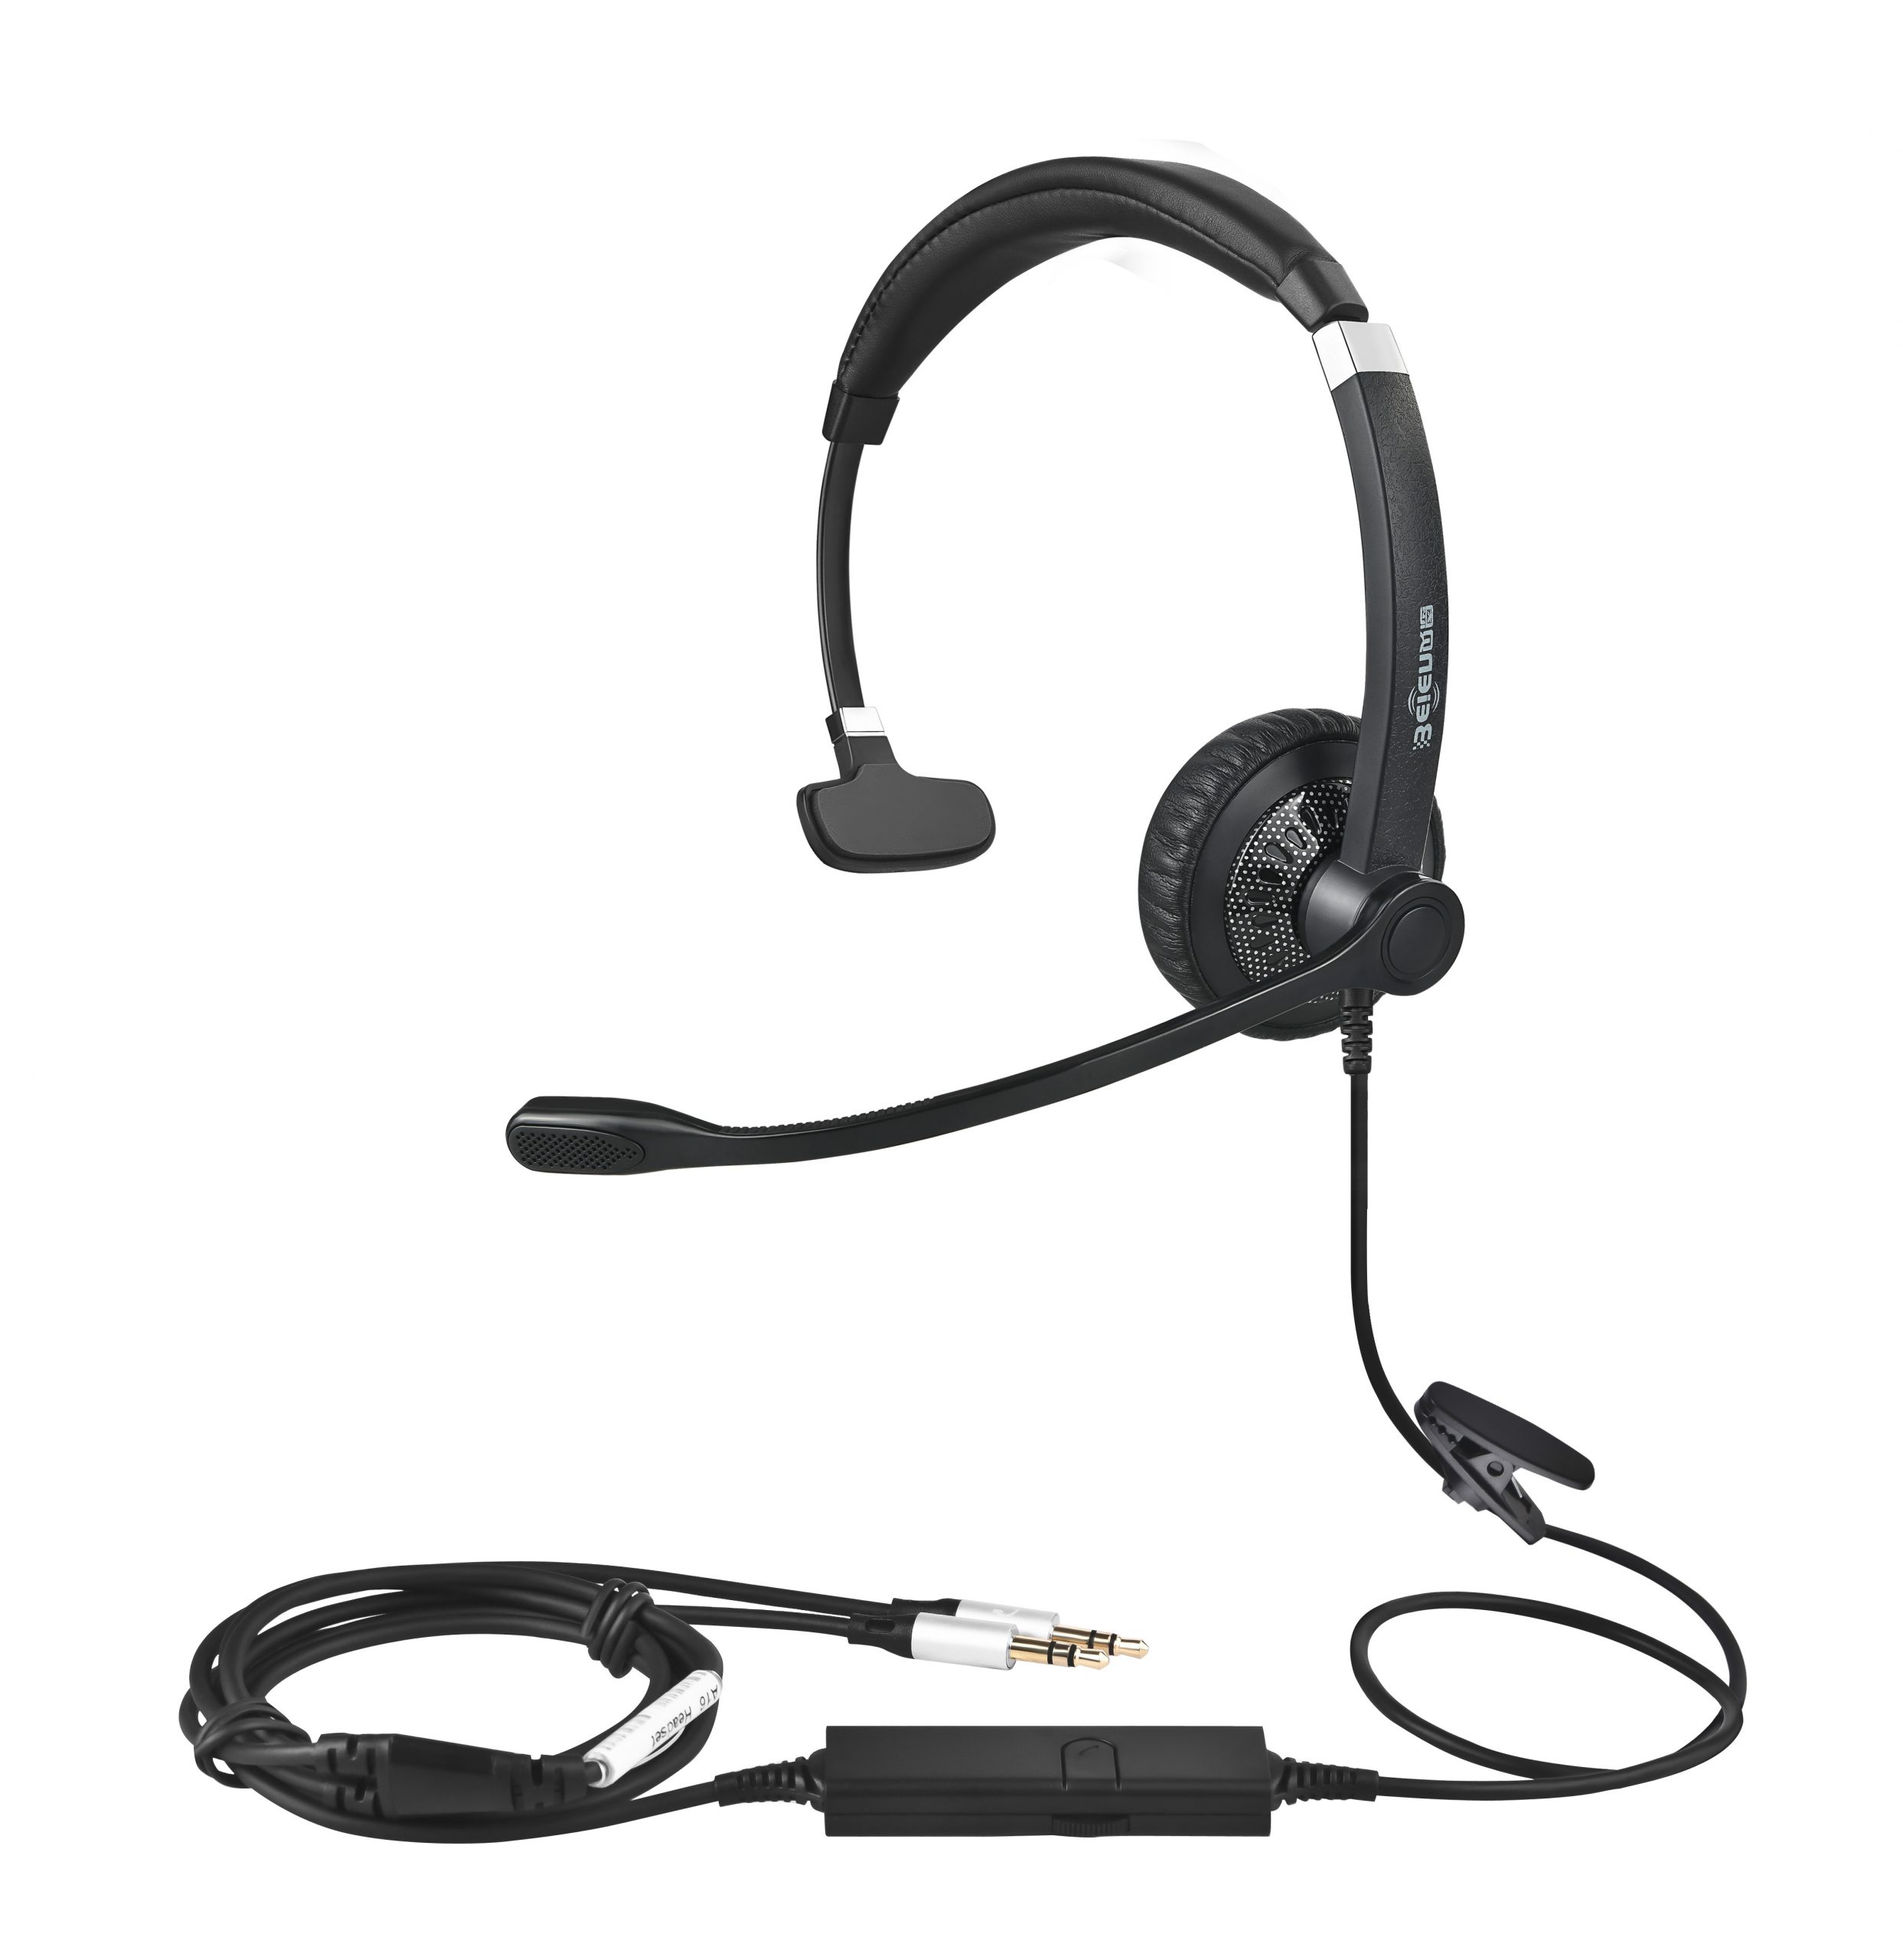 Beien贝恩UF91-PC双插头电脑话务耳麦 电话耳机 呼叫中心专用耳机